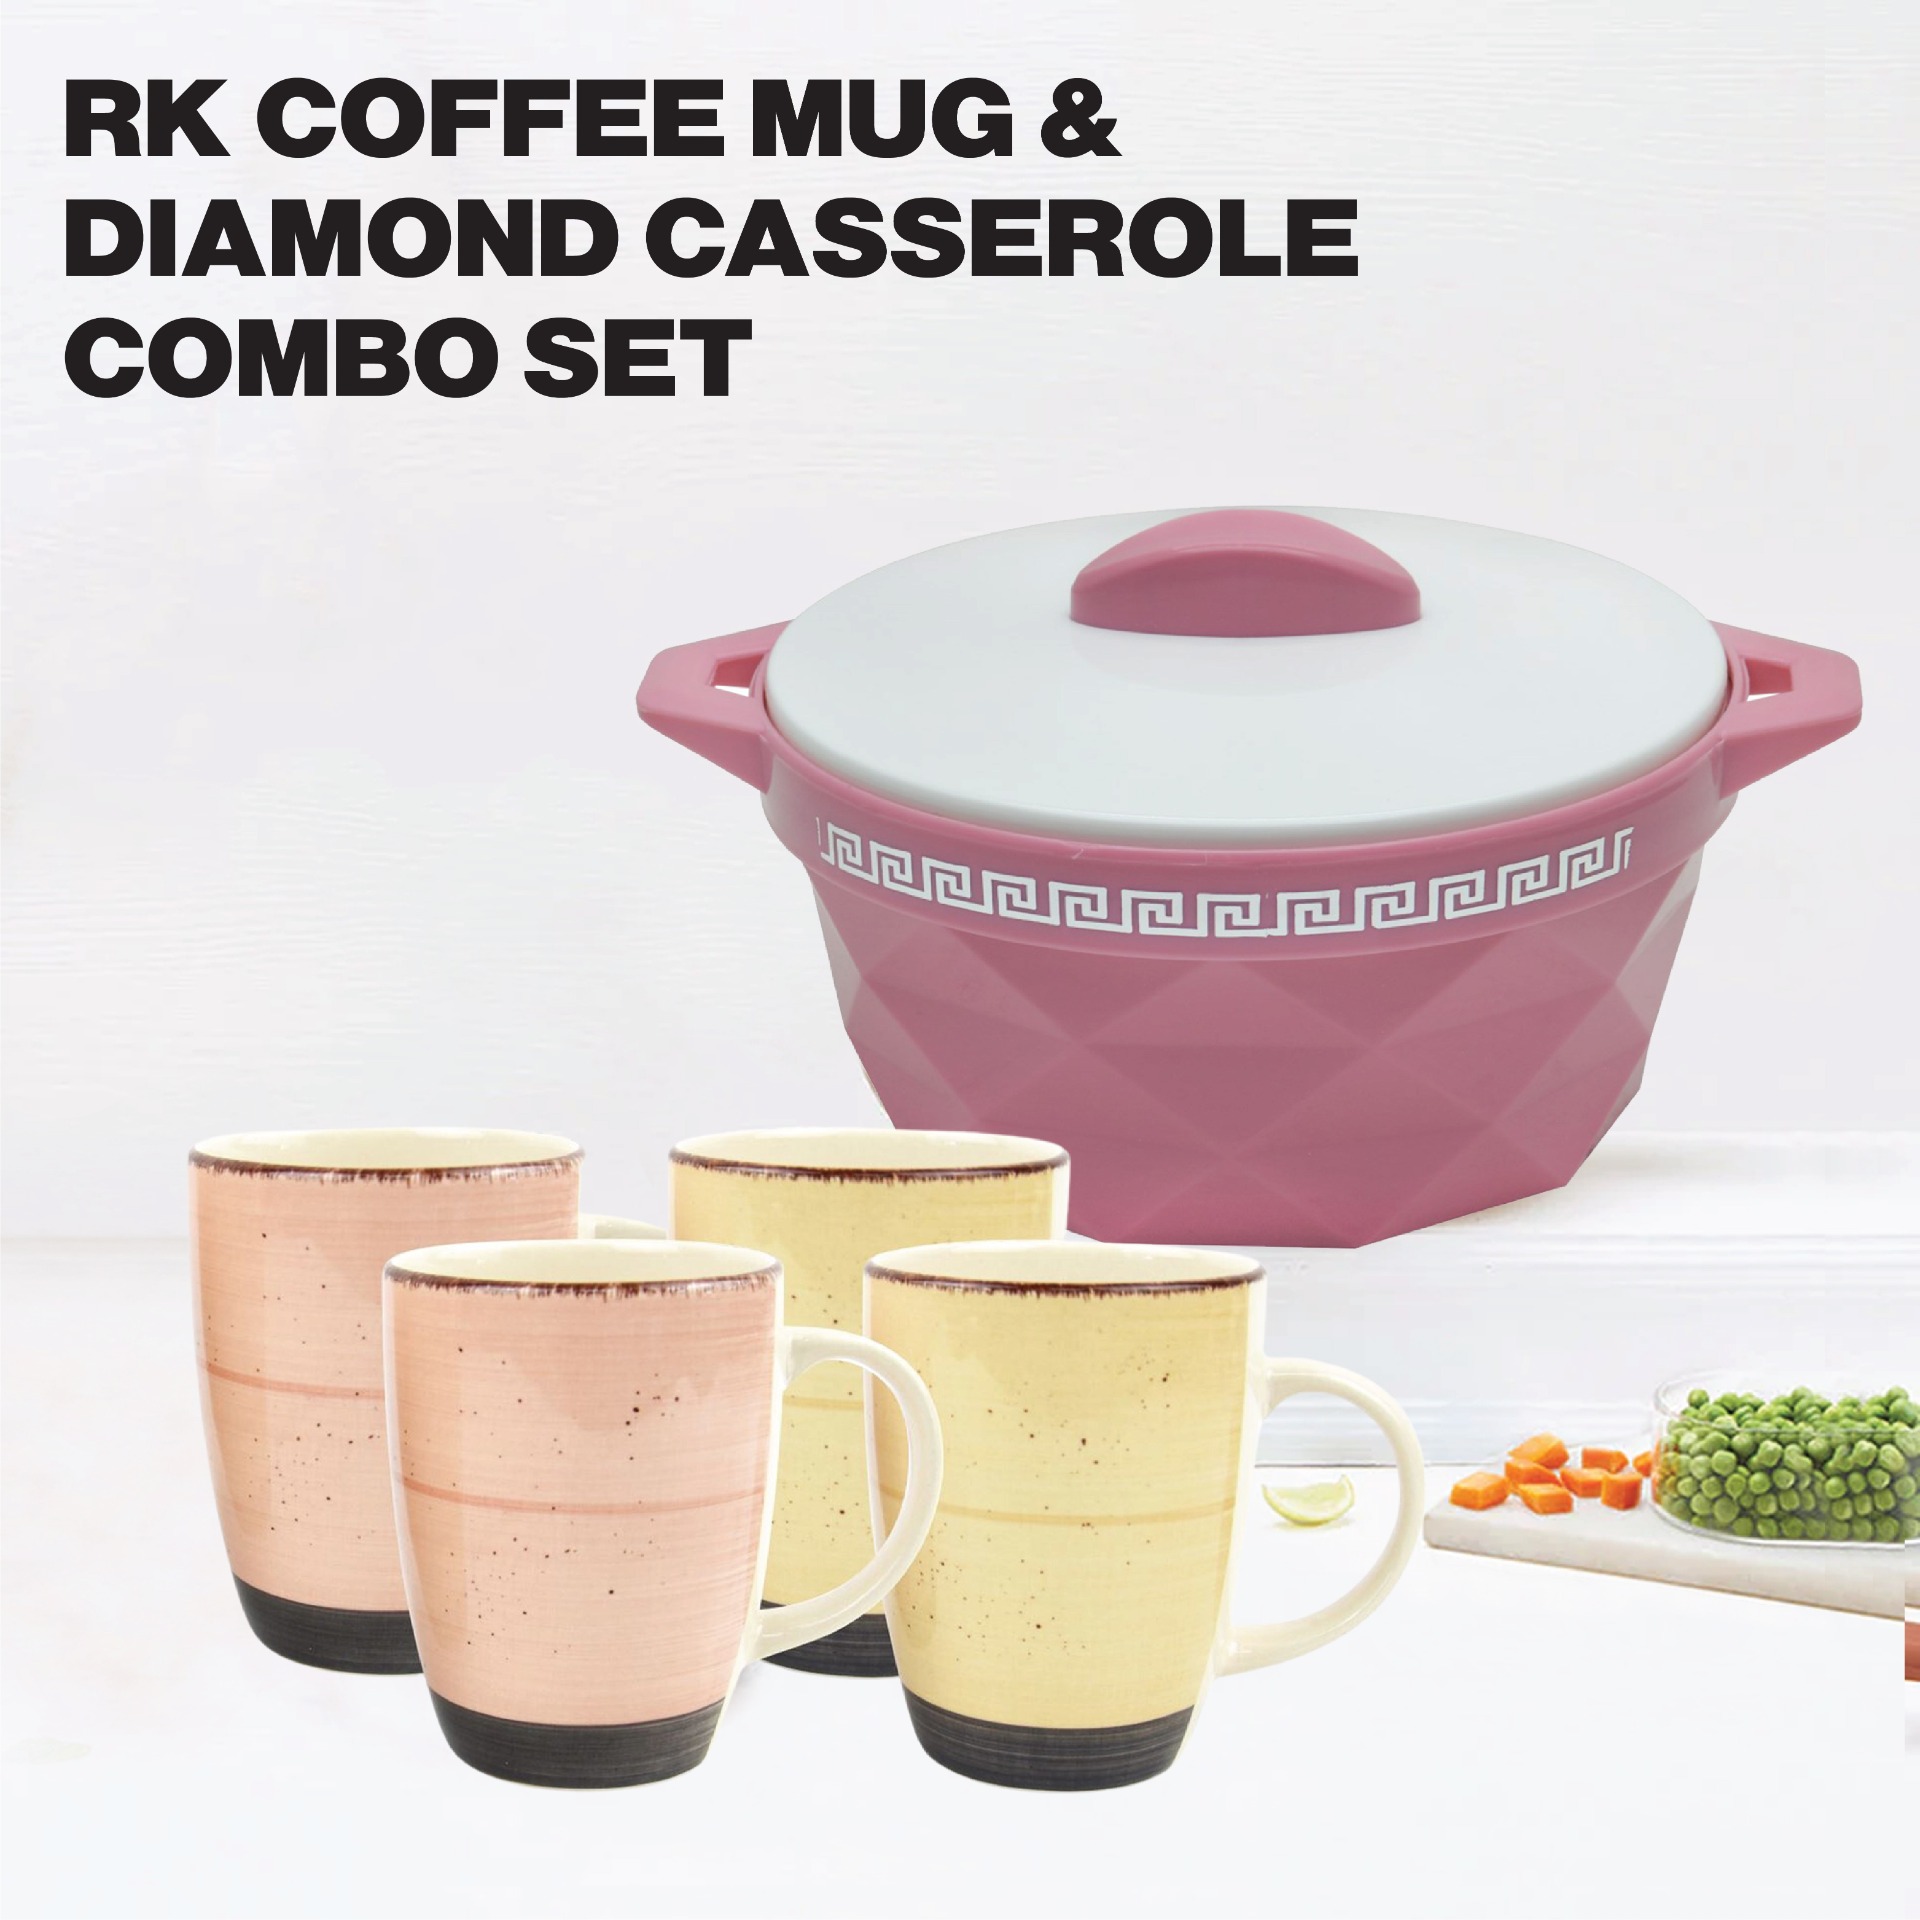 RK Coffee Mug and Diamond Casserole Combo Set